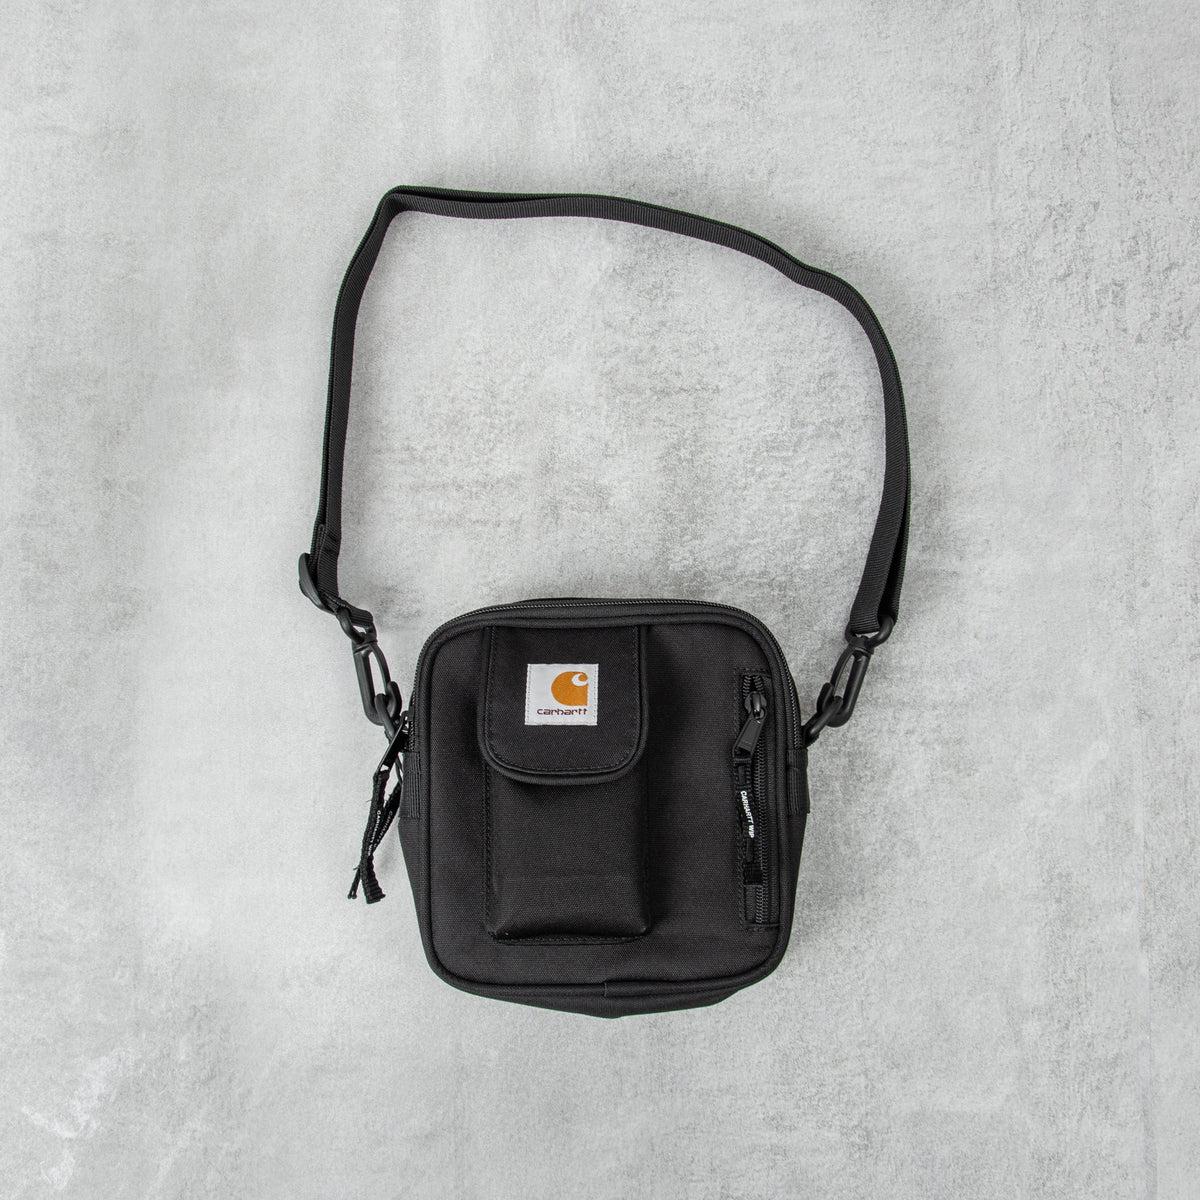 Buy the Carhartt Essentials Bag - Black online @Union Clothing